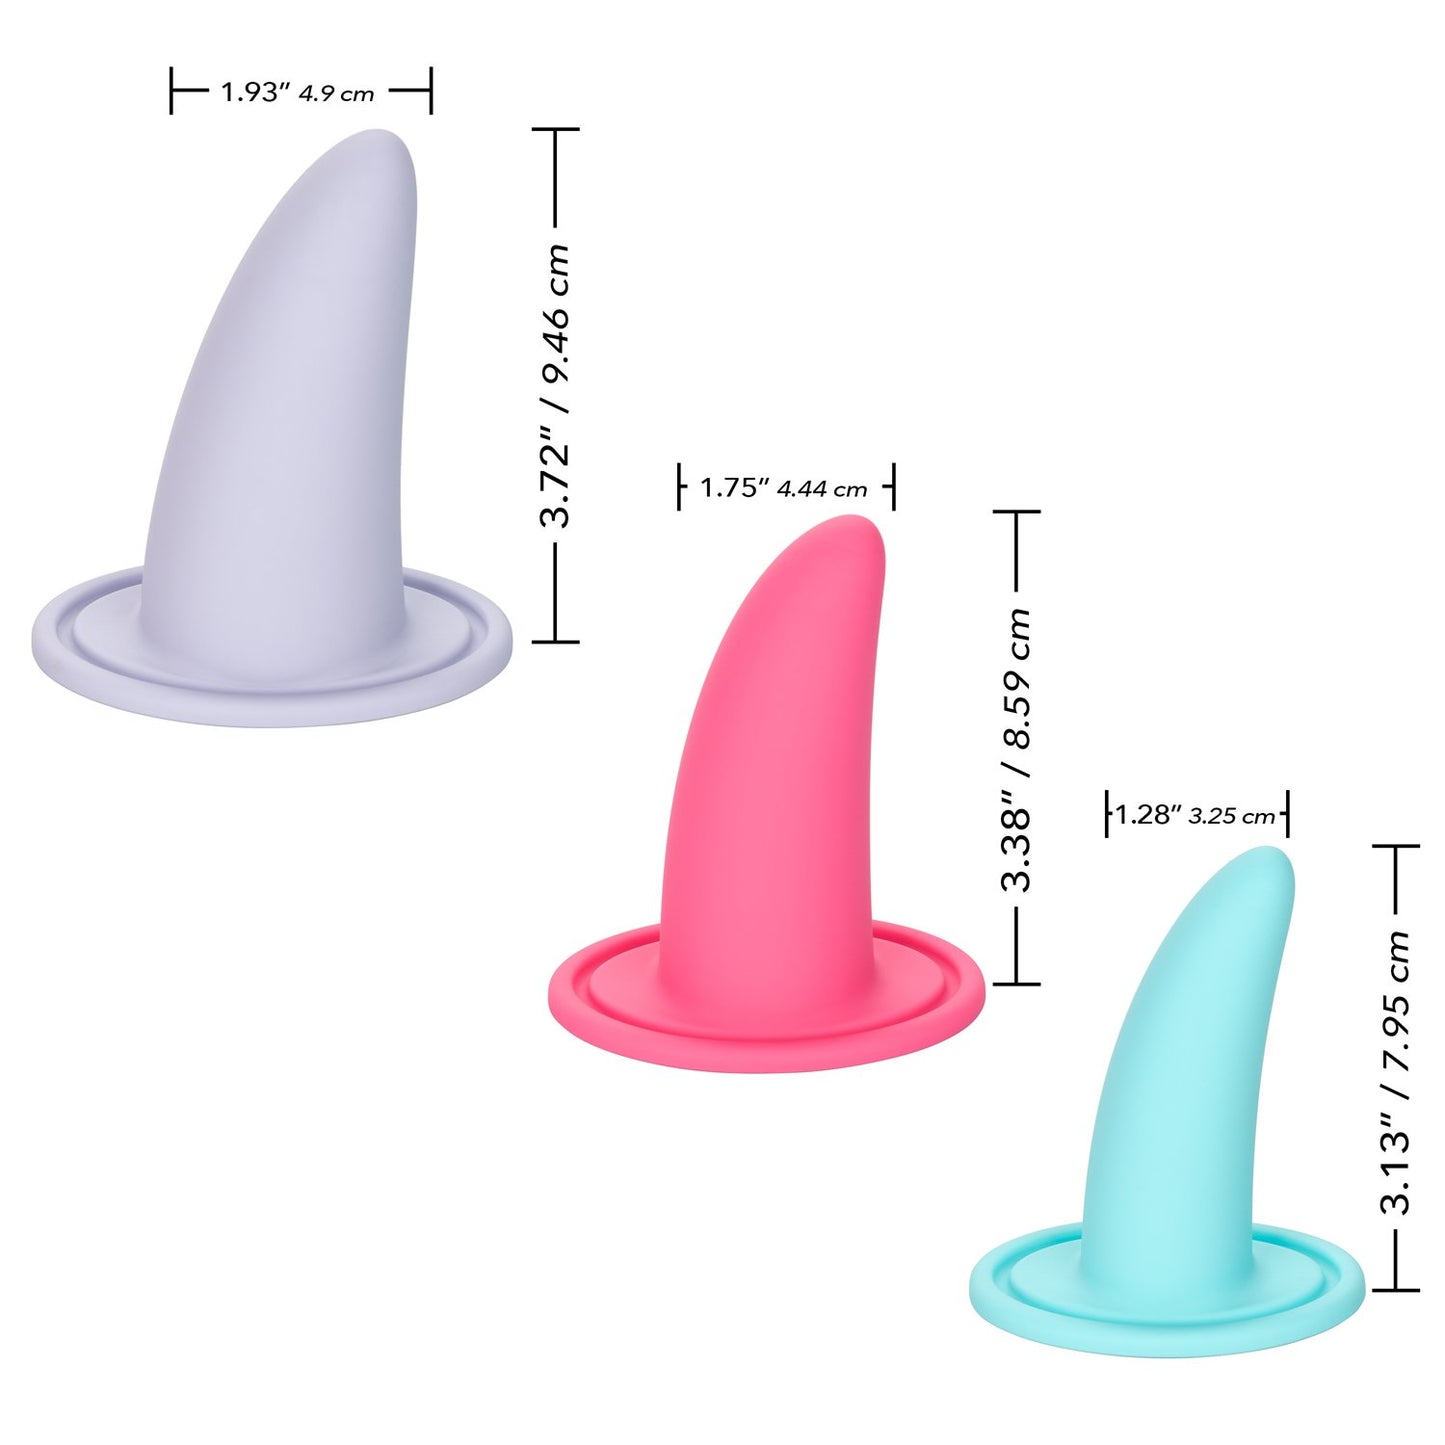 She-ology Advanced 3-Piece Wearable Vaginal Dilator Set